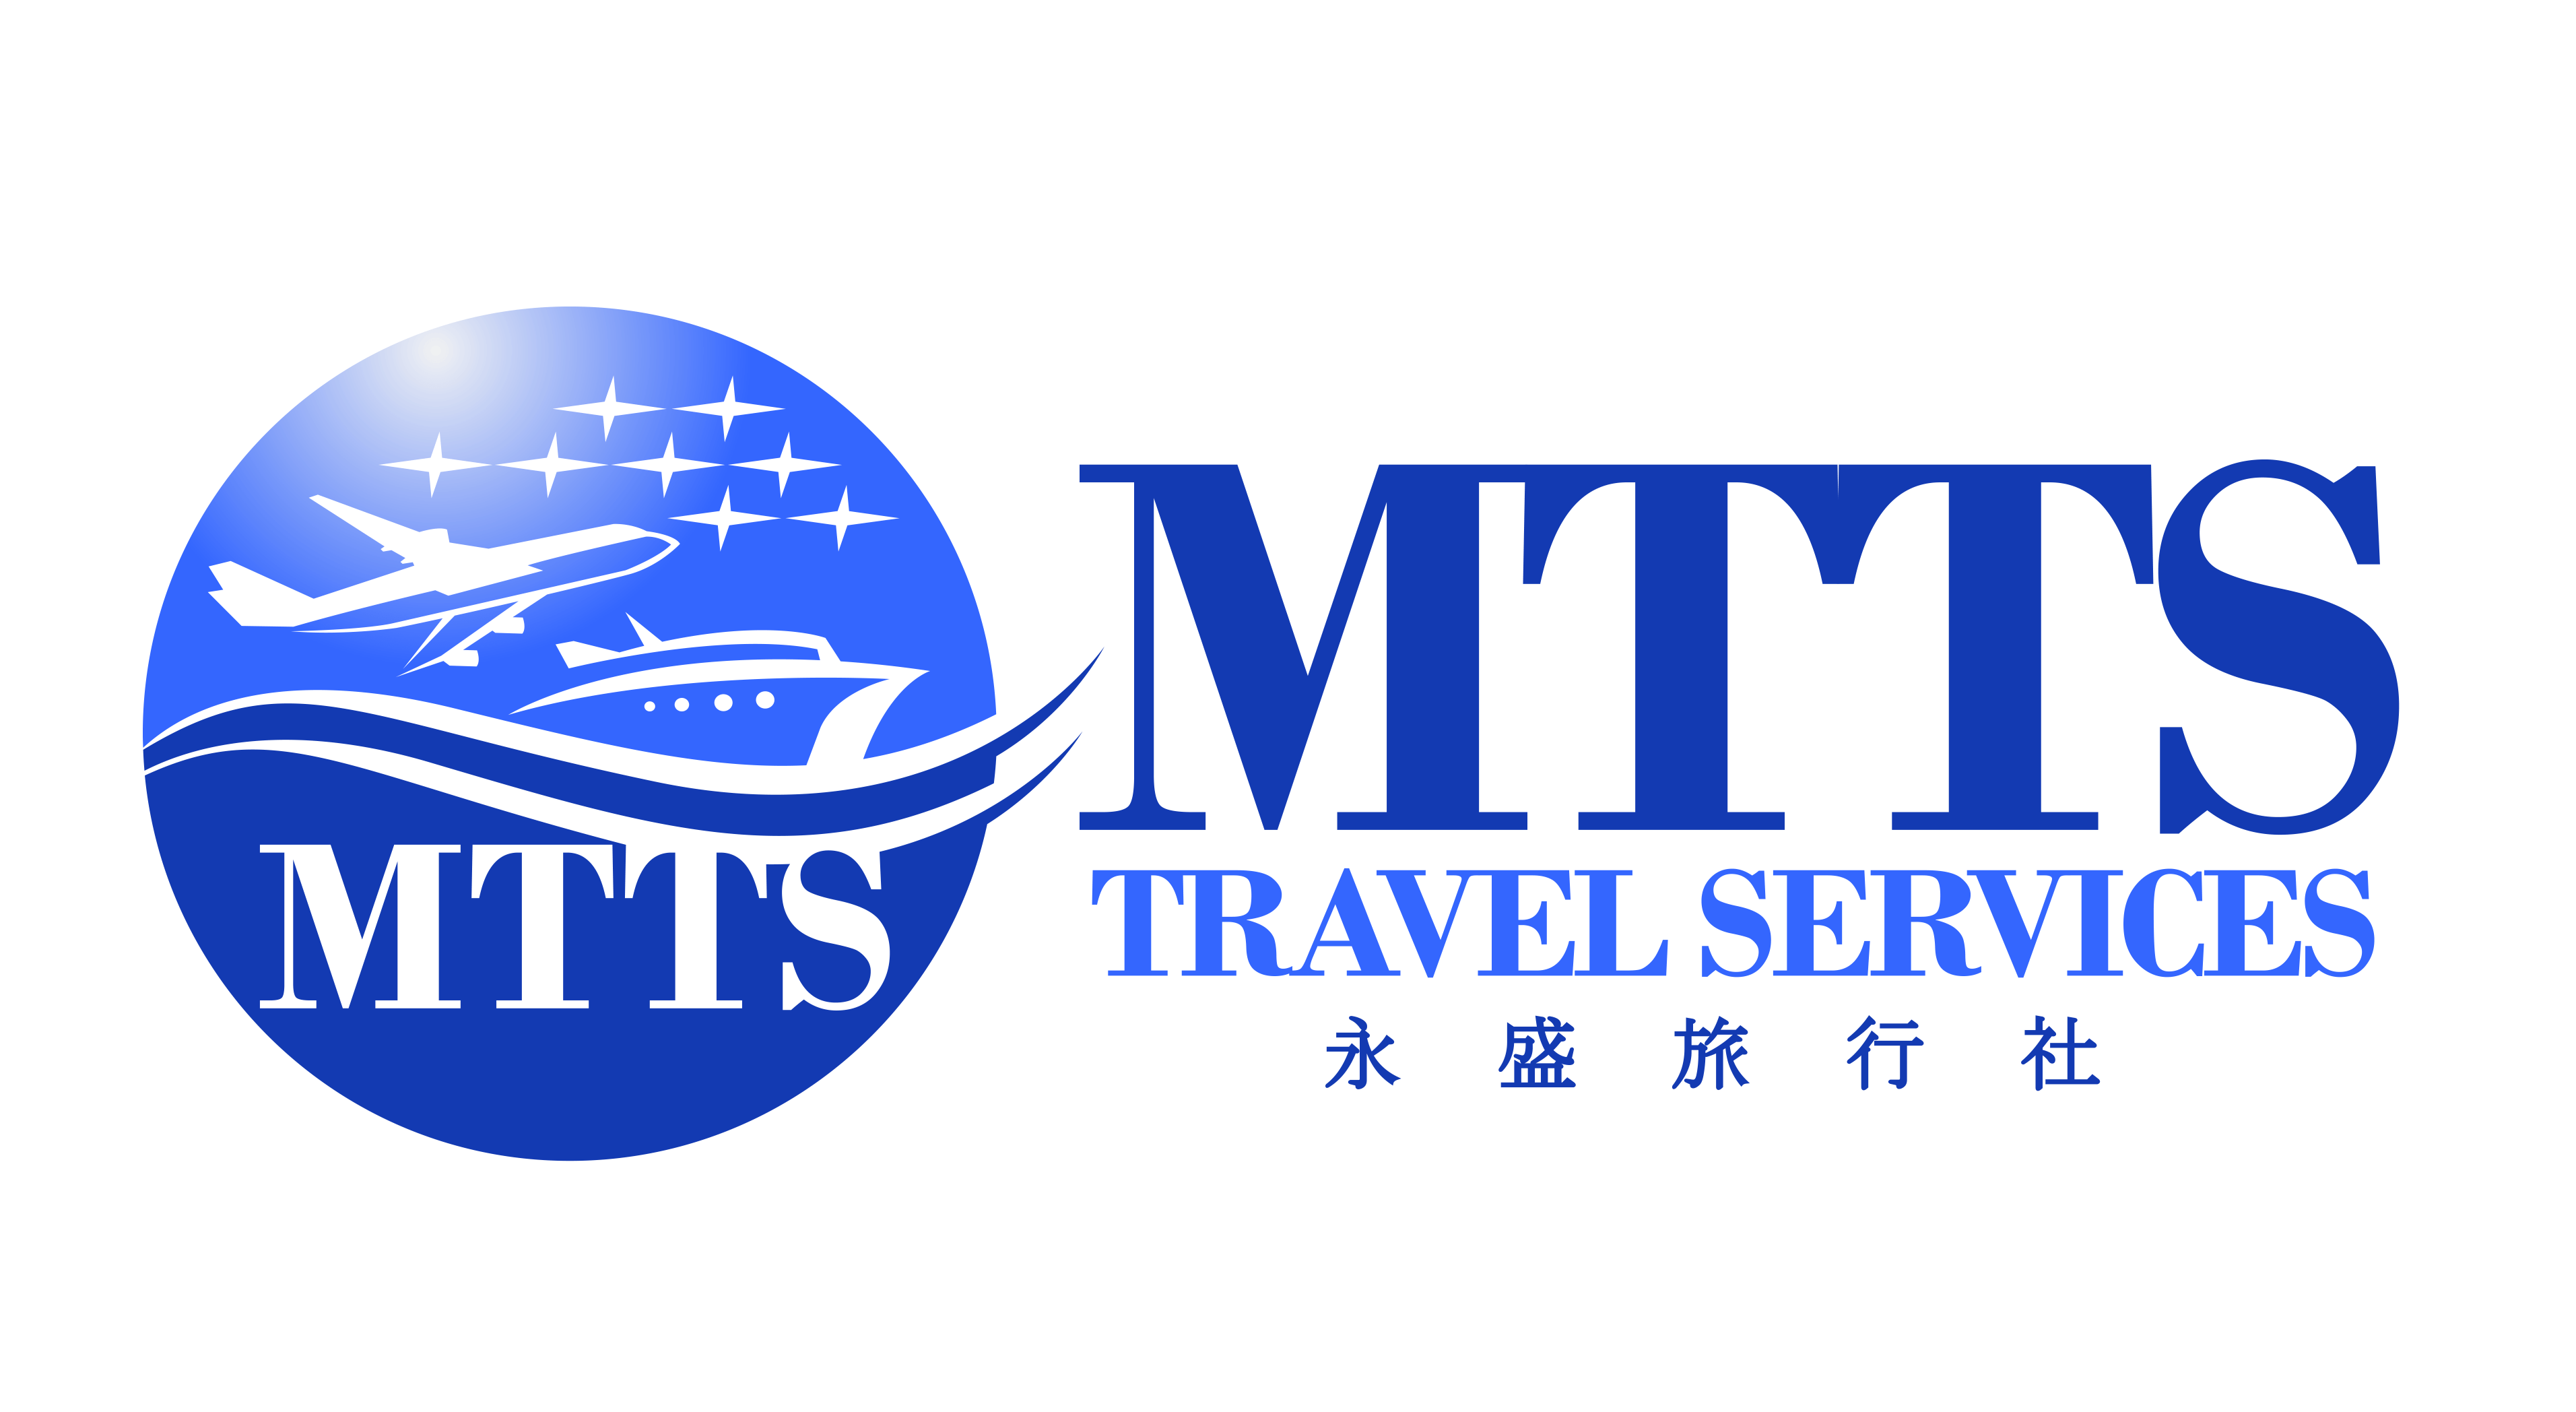 MTT-S Logo - MTTS TRAVEL SERVICES